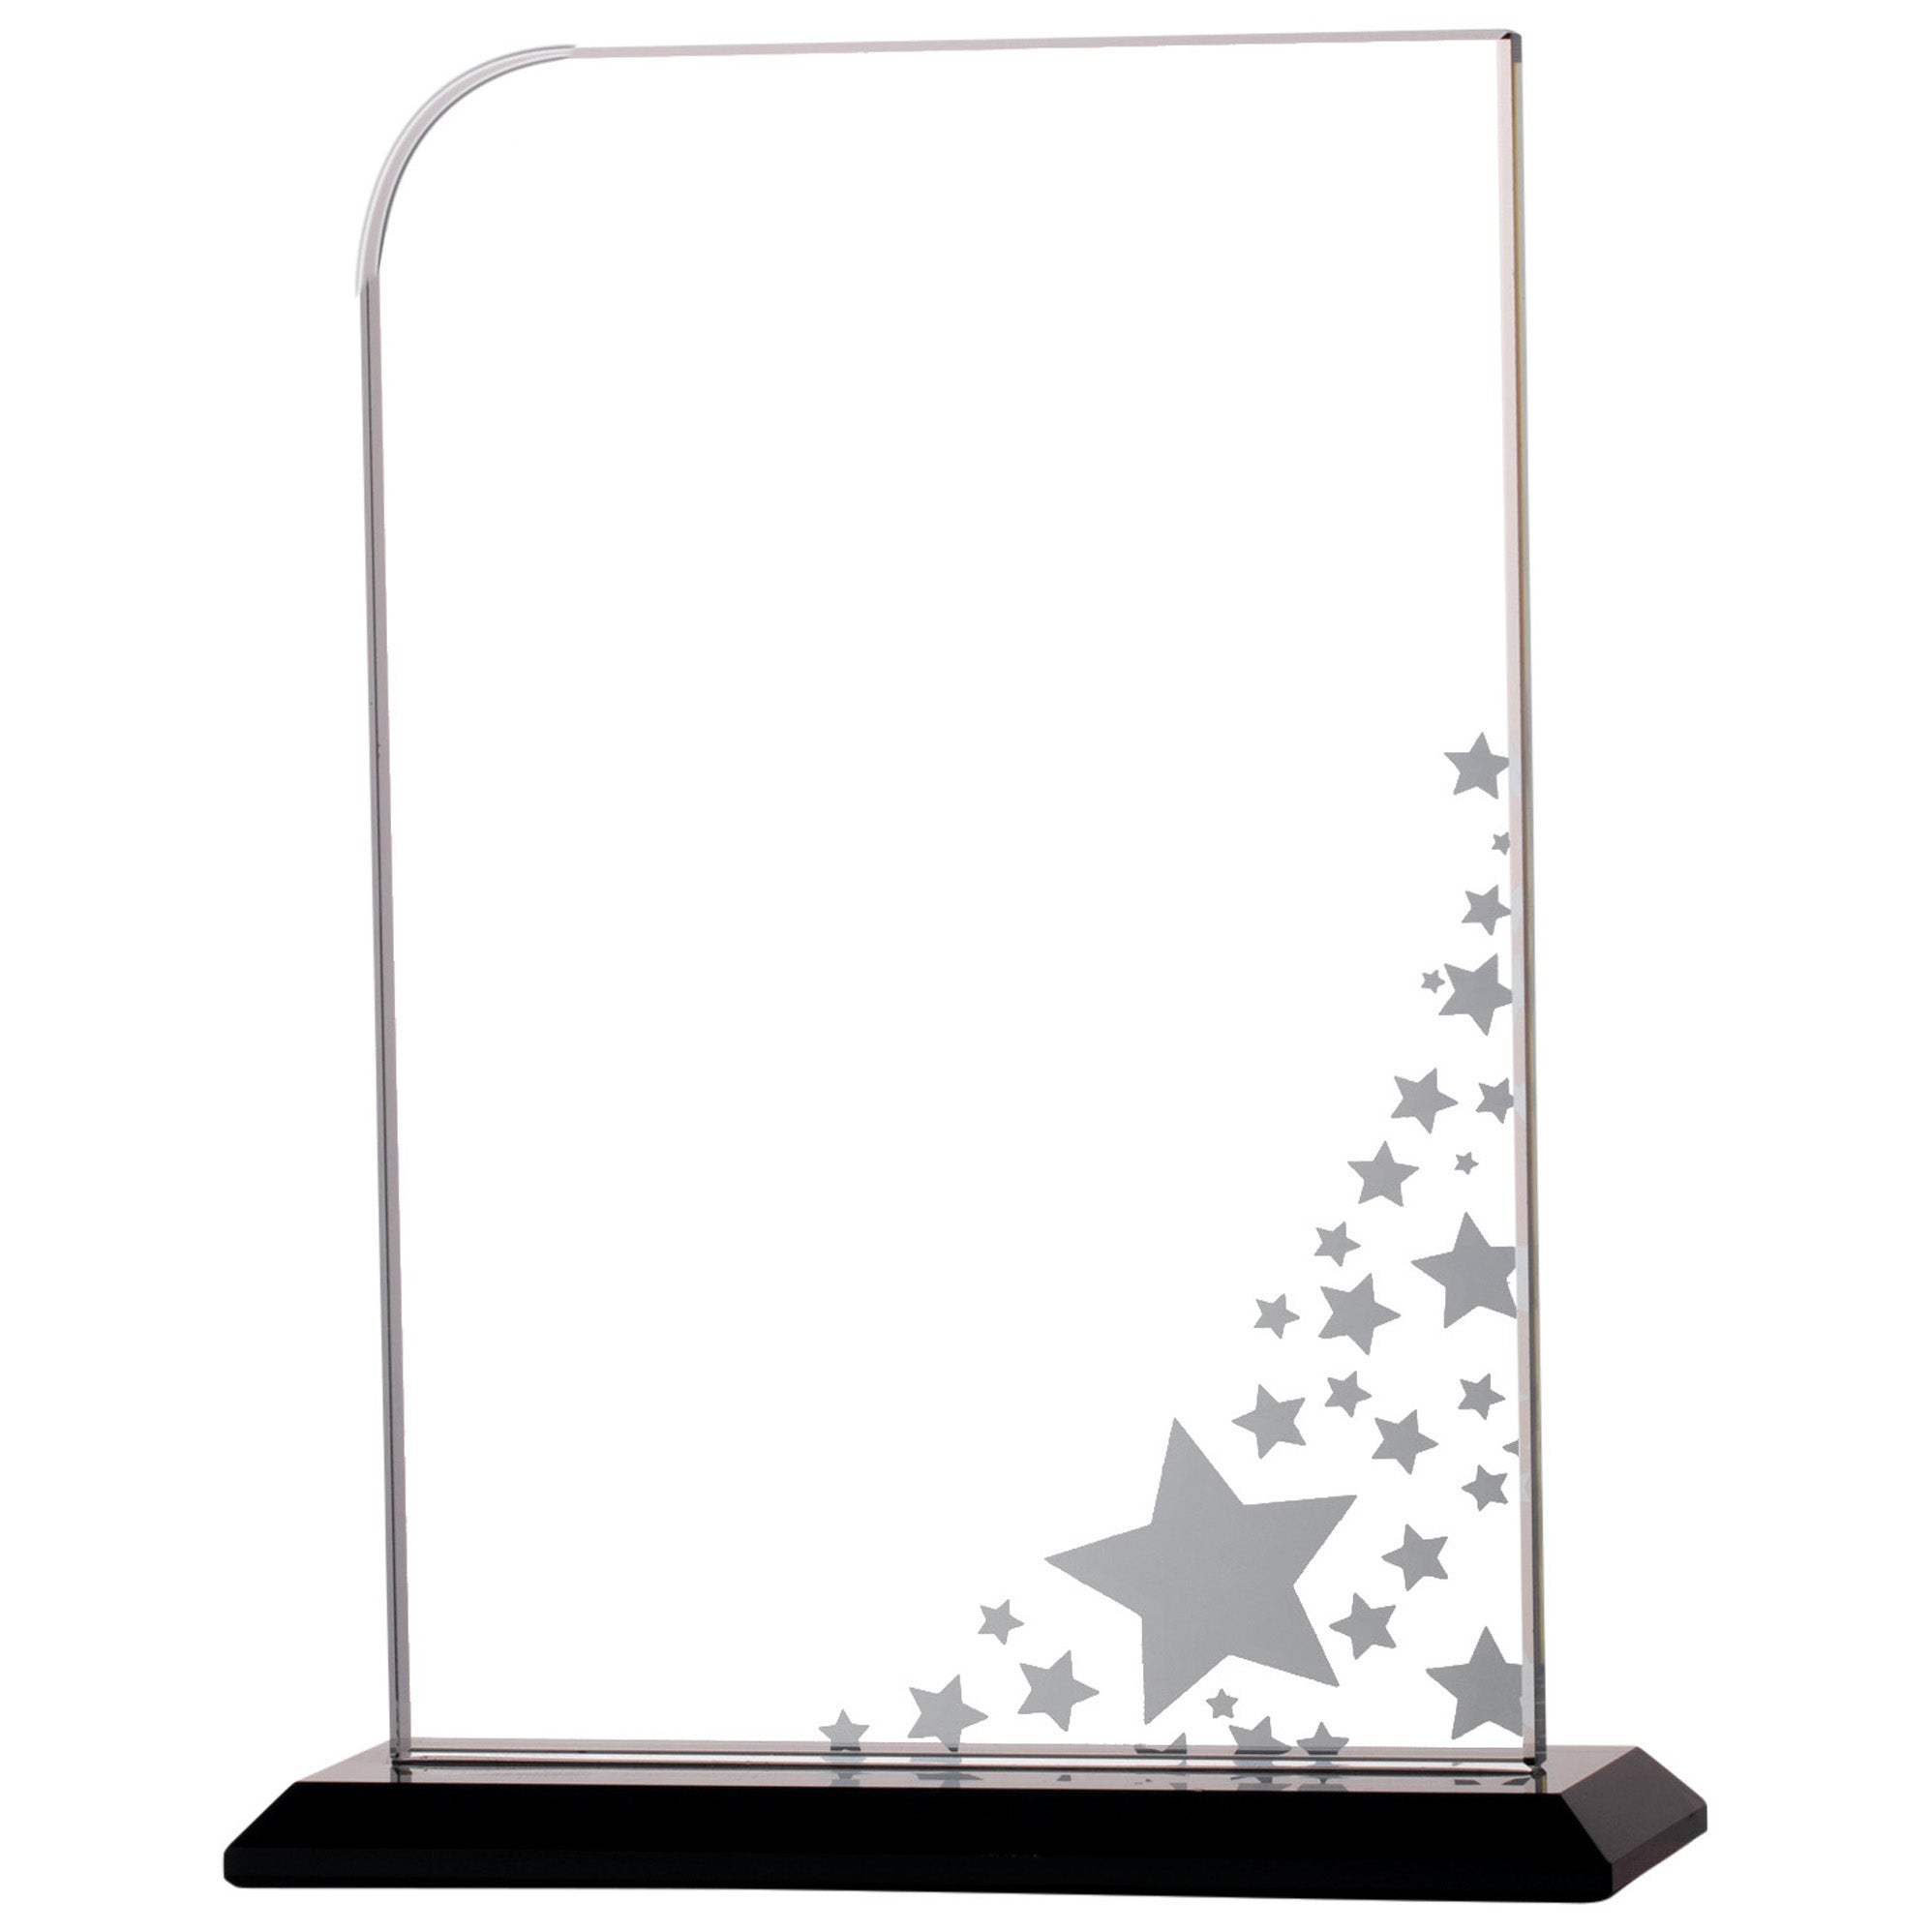 Portrait Glass Award with Stars Detailing on Black Base